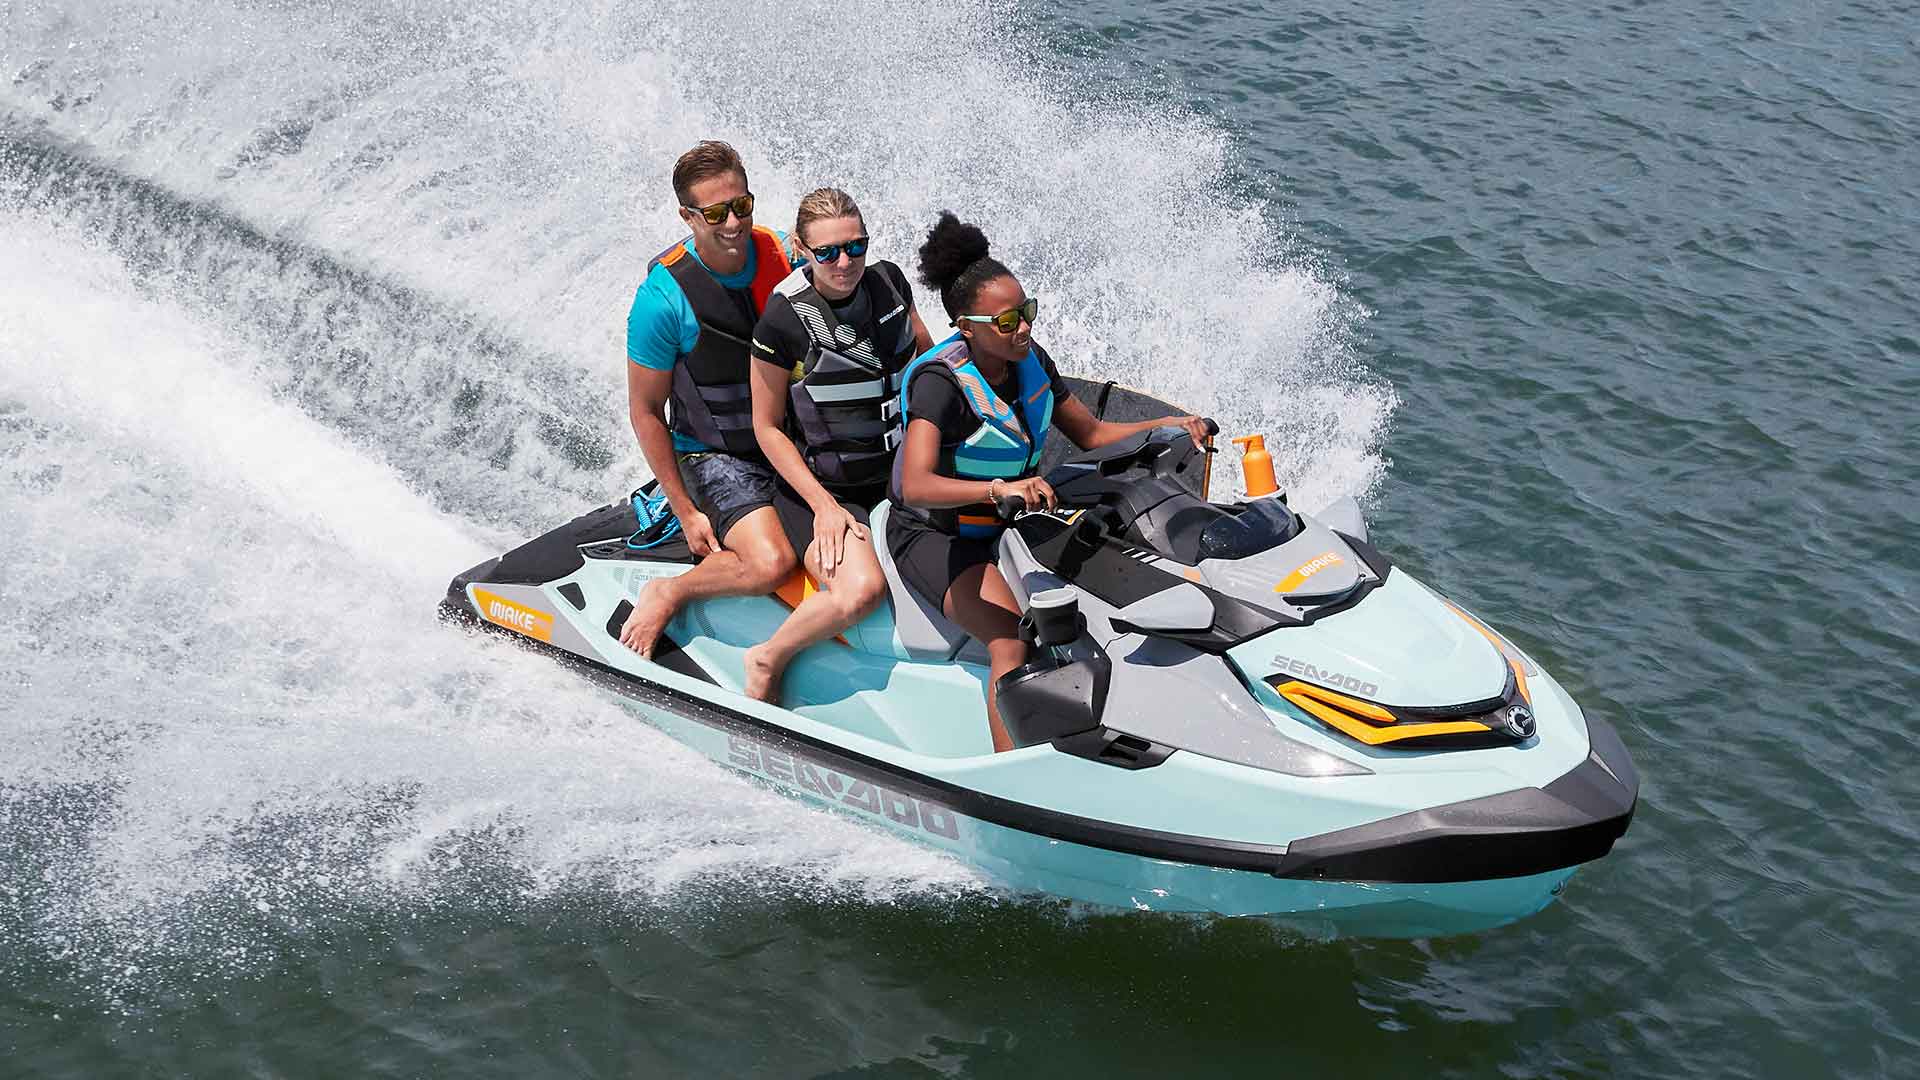 Family enjoying their ride on a Sea-Doo